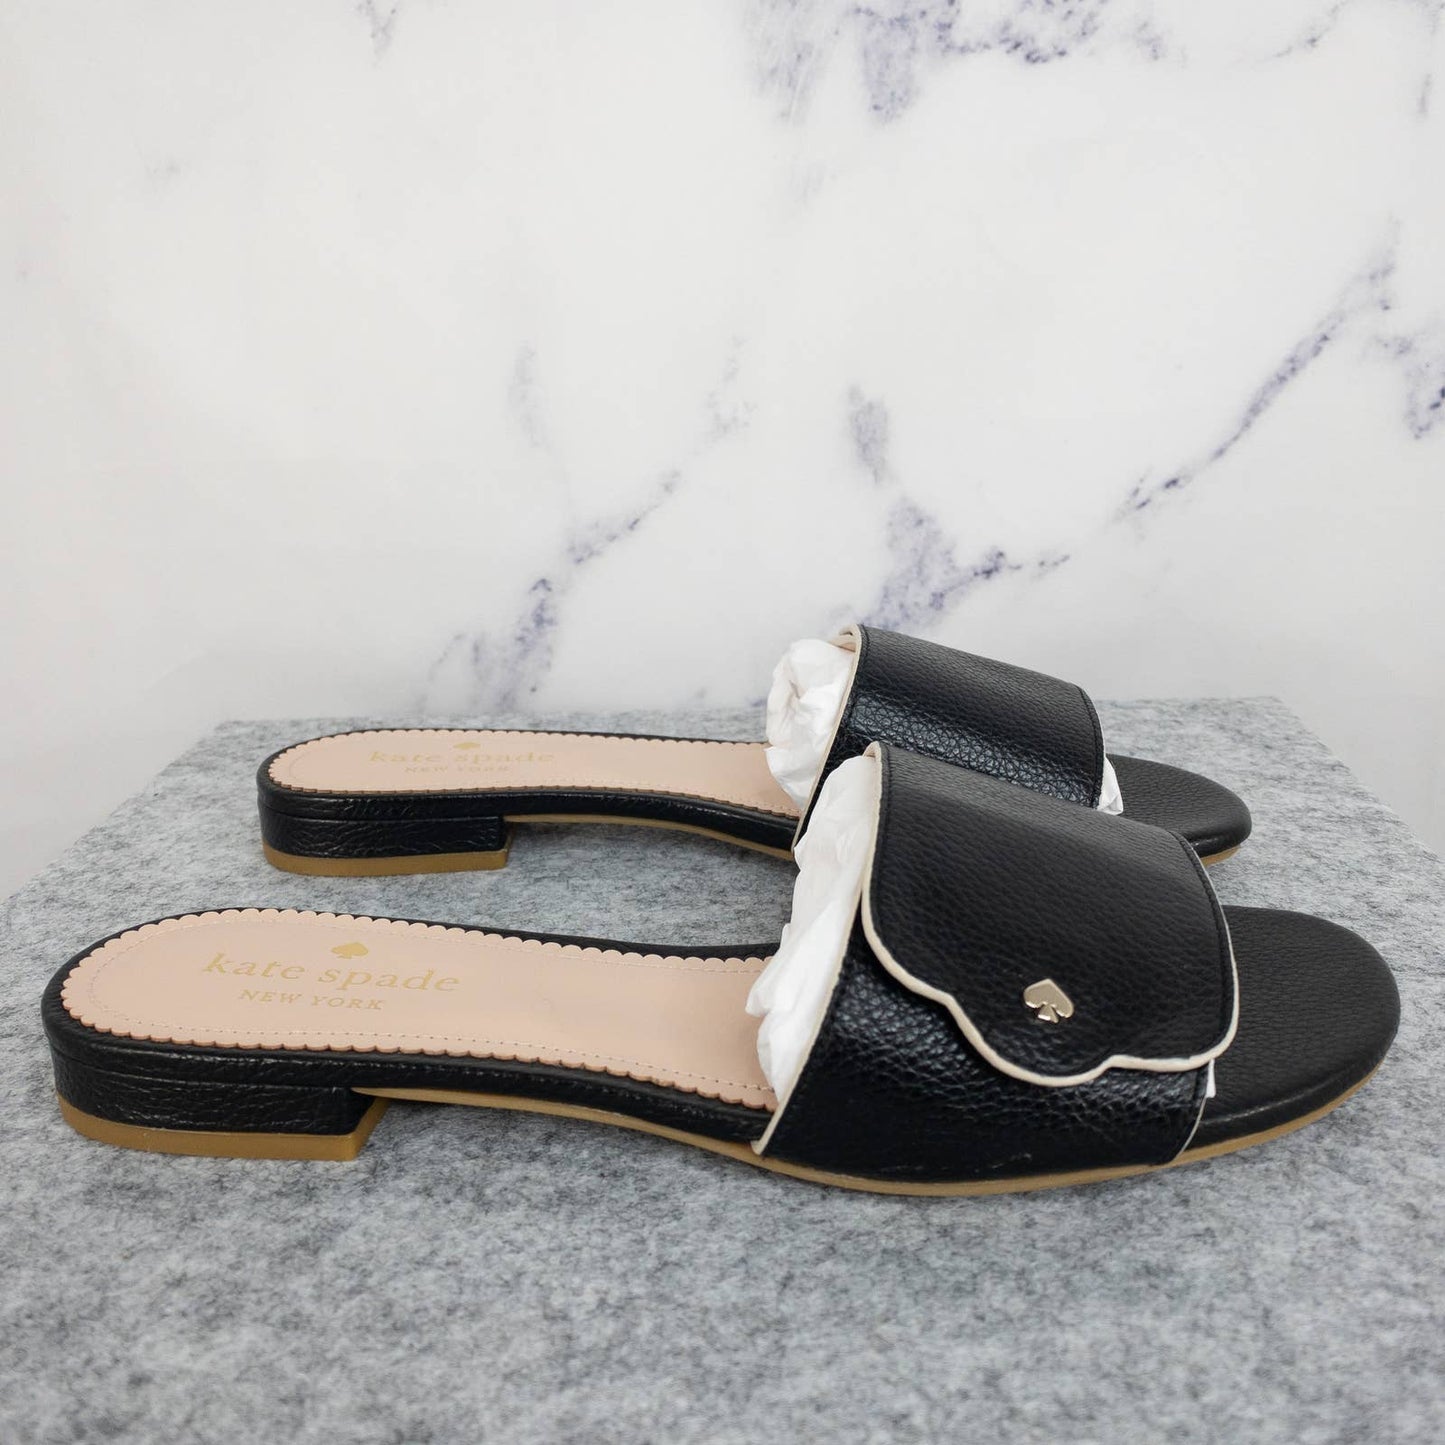 Kate Spade New York | Ginger Sandals | Size 7.5